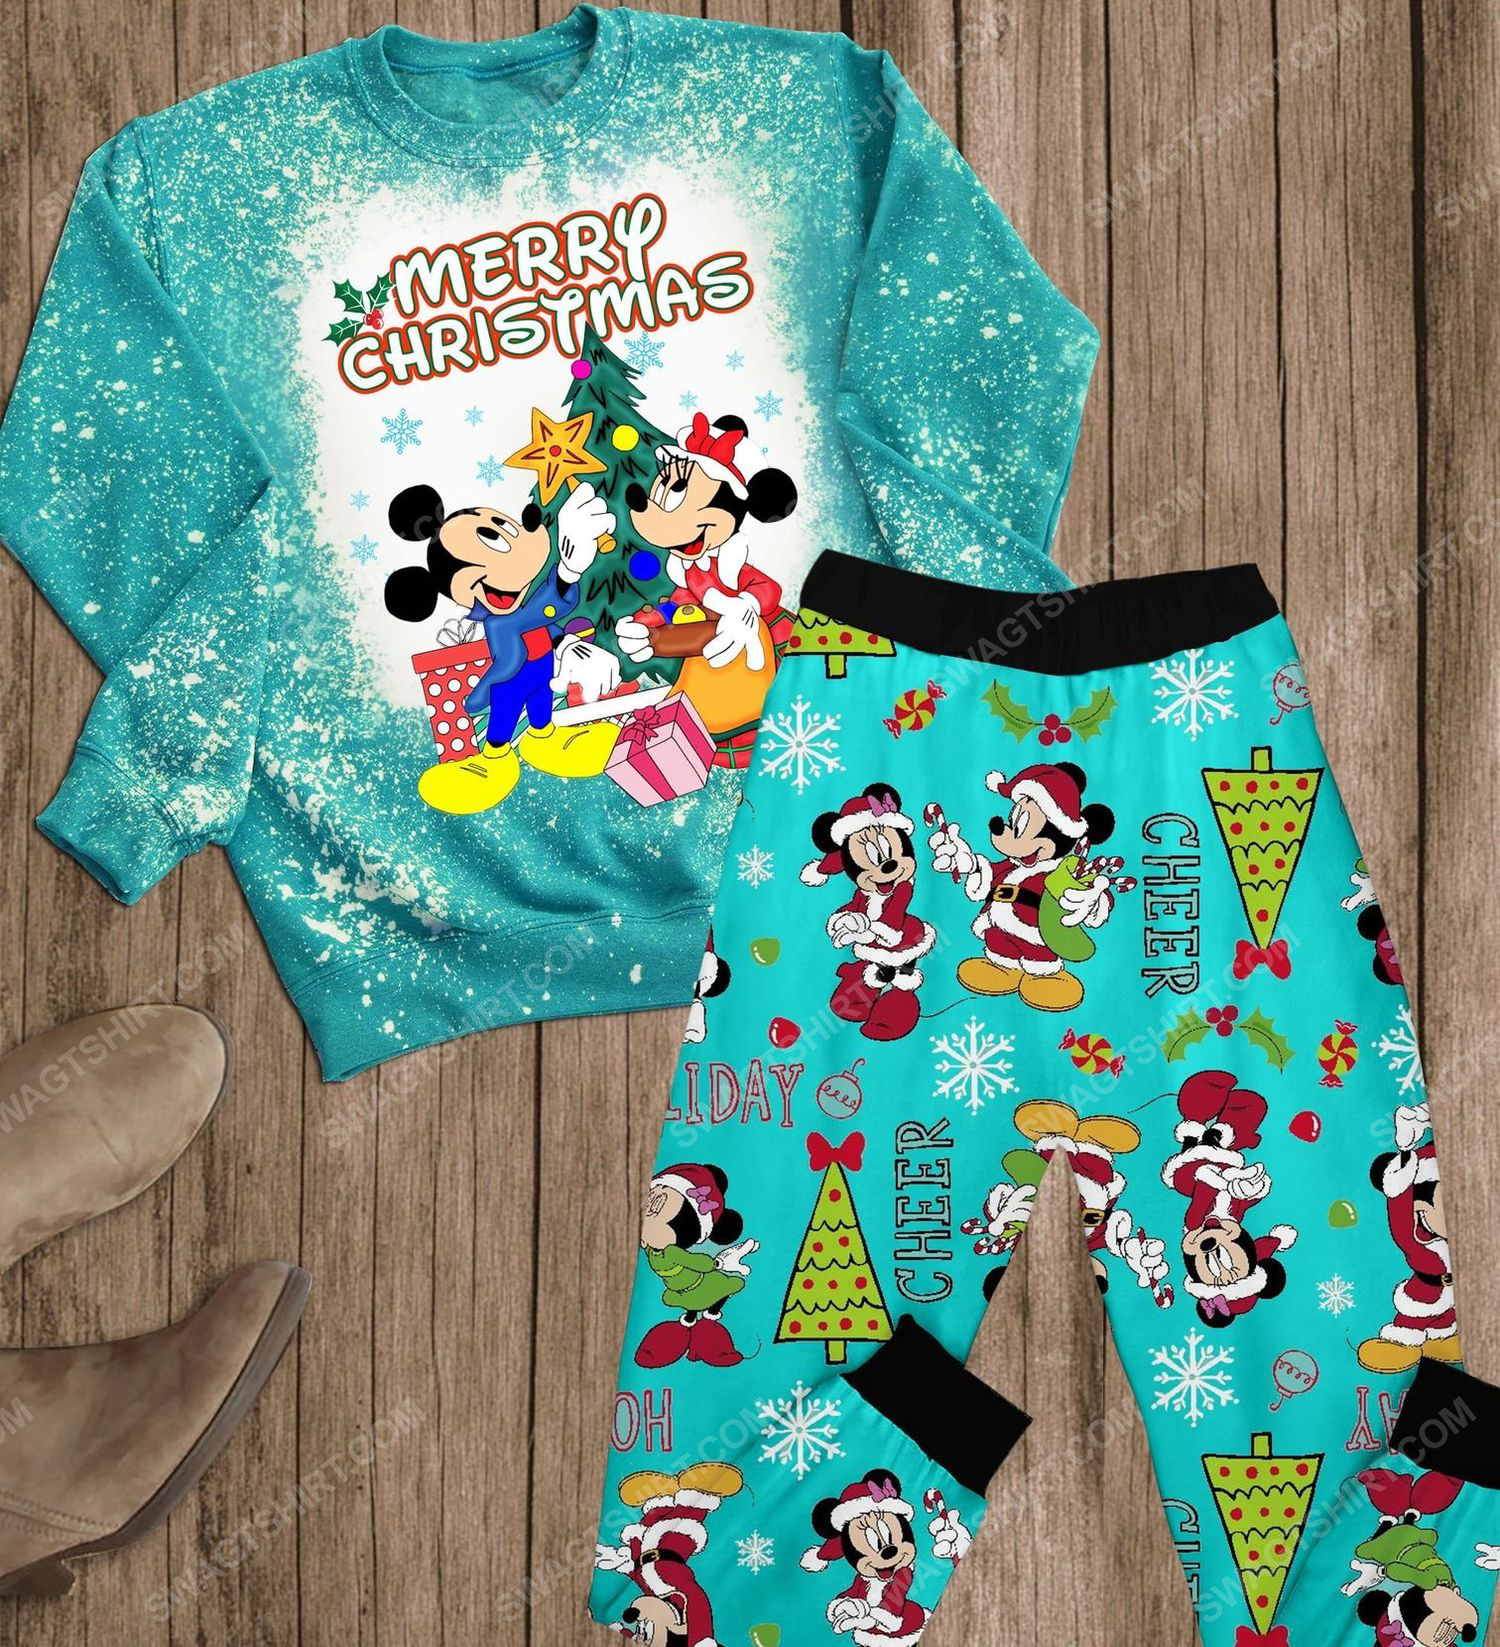 Mickey mouse merry christmas full print pajamas set